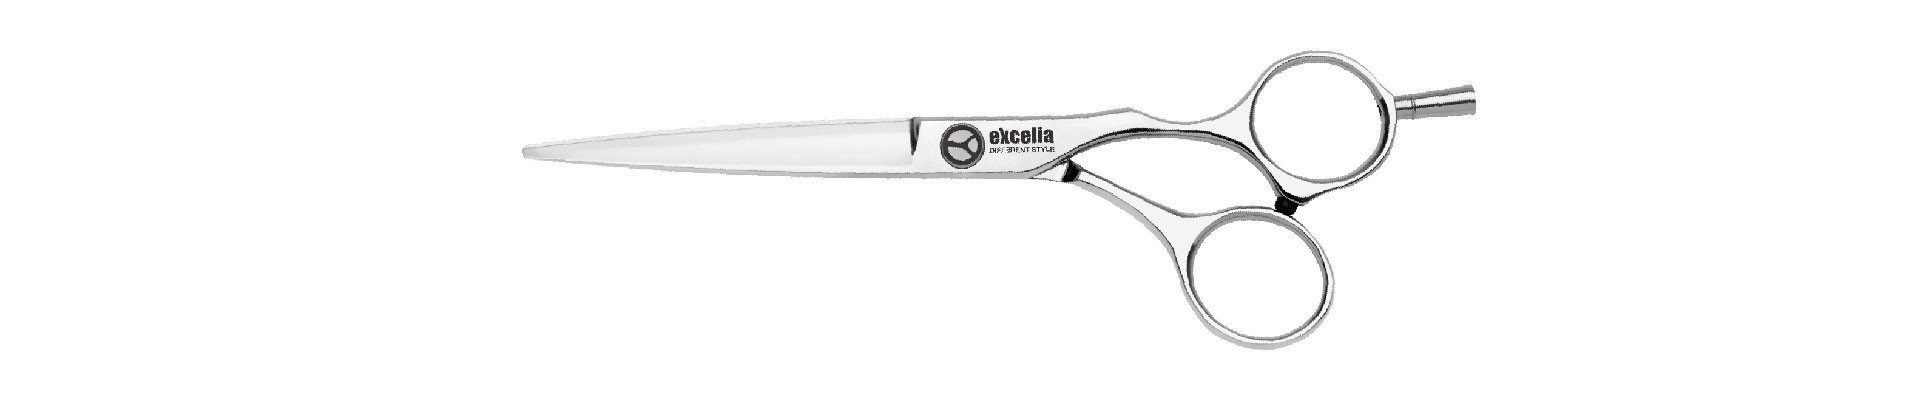 KASHO Excelia | great scissor to start your KASHO experience